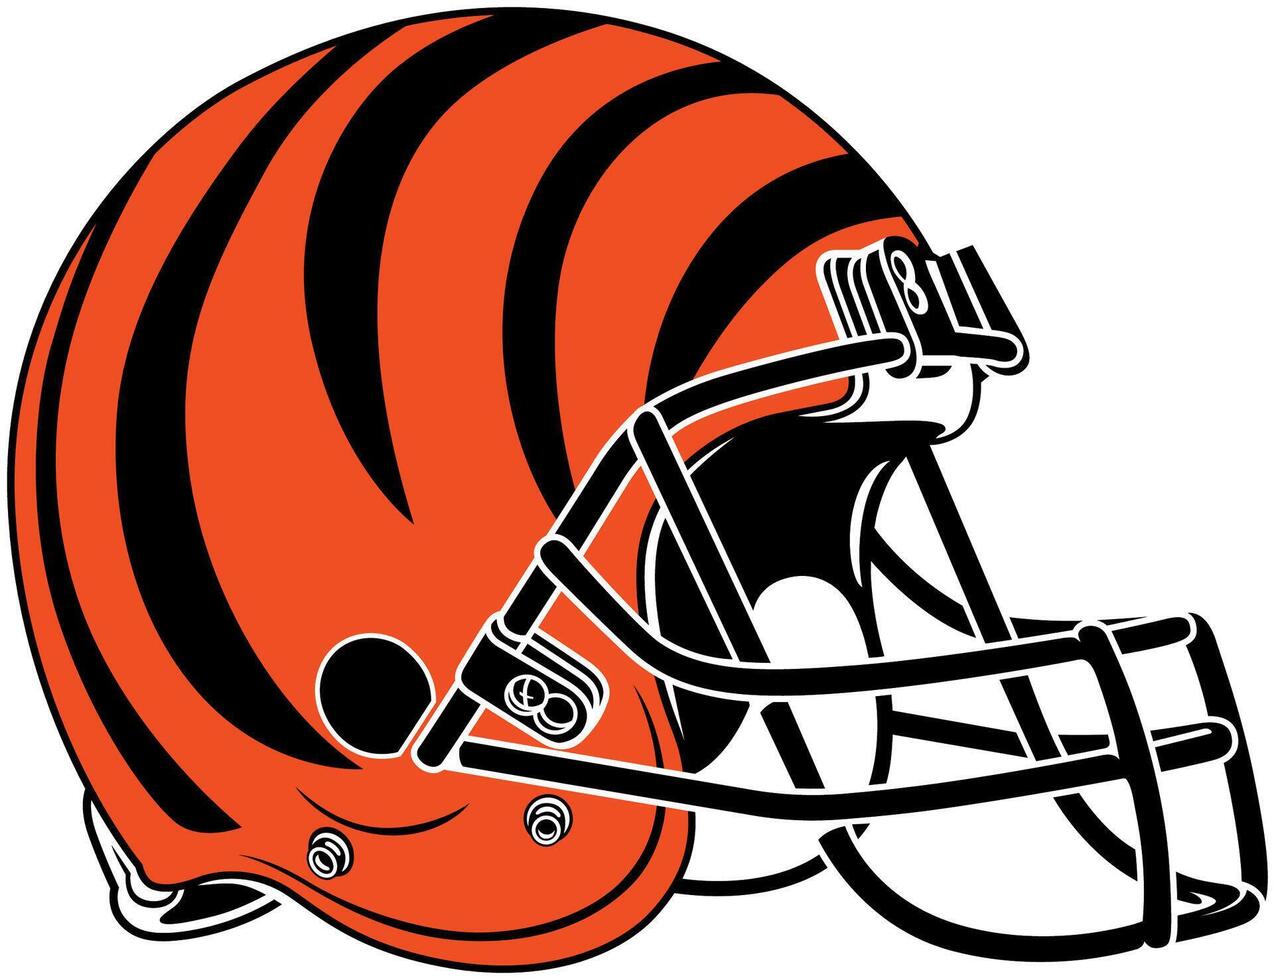 The orange helmet of the Cincinnati Bengals American football team vector